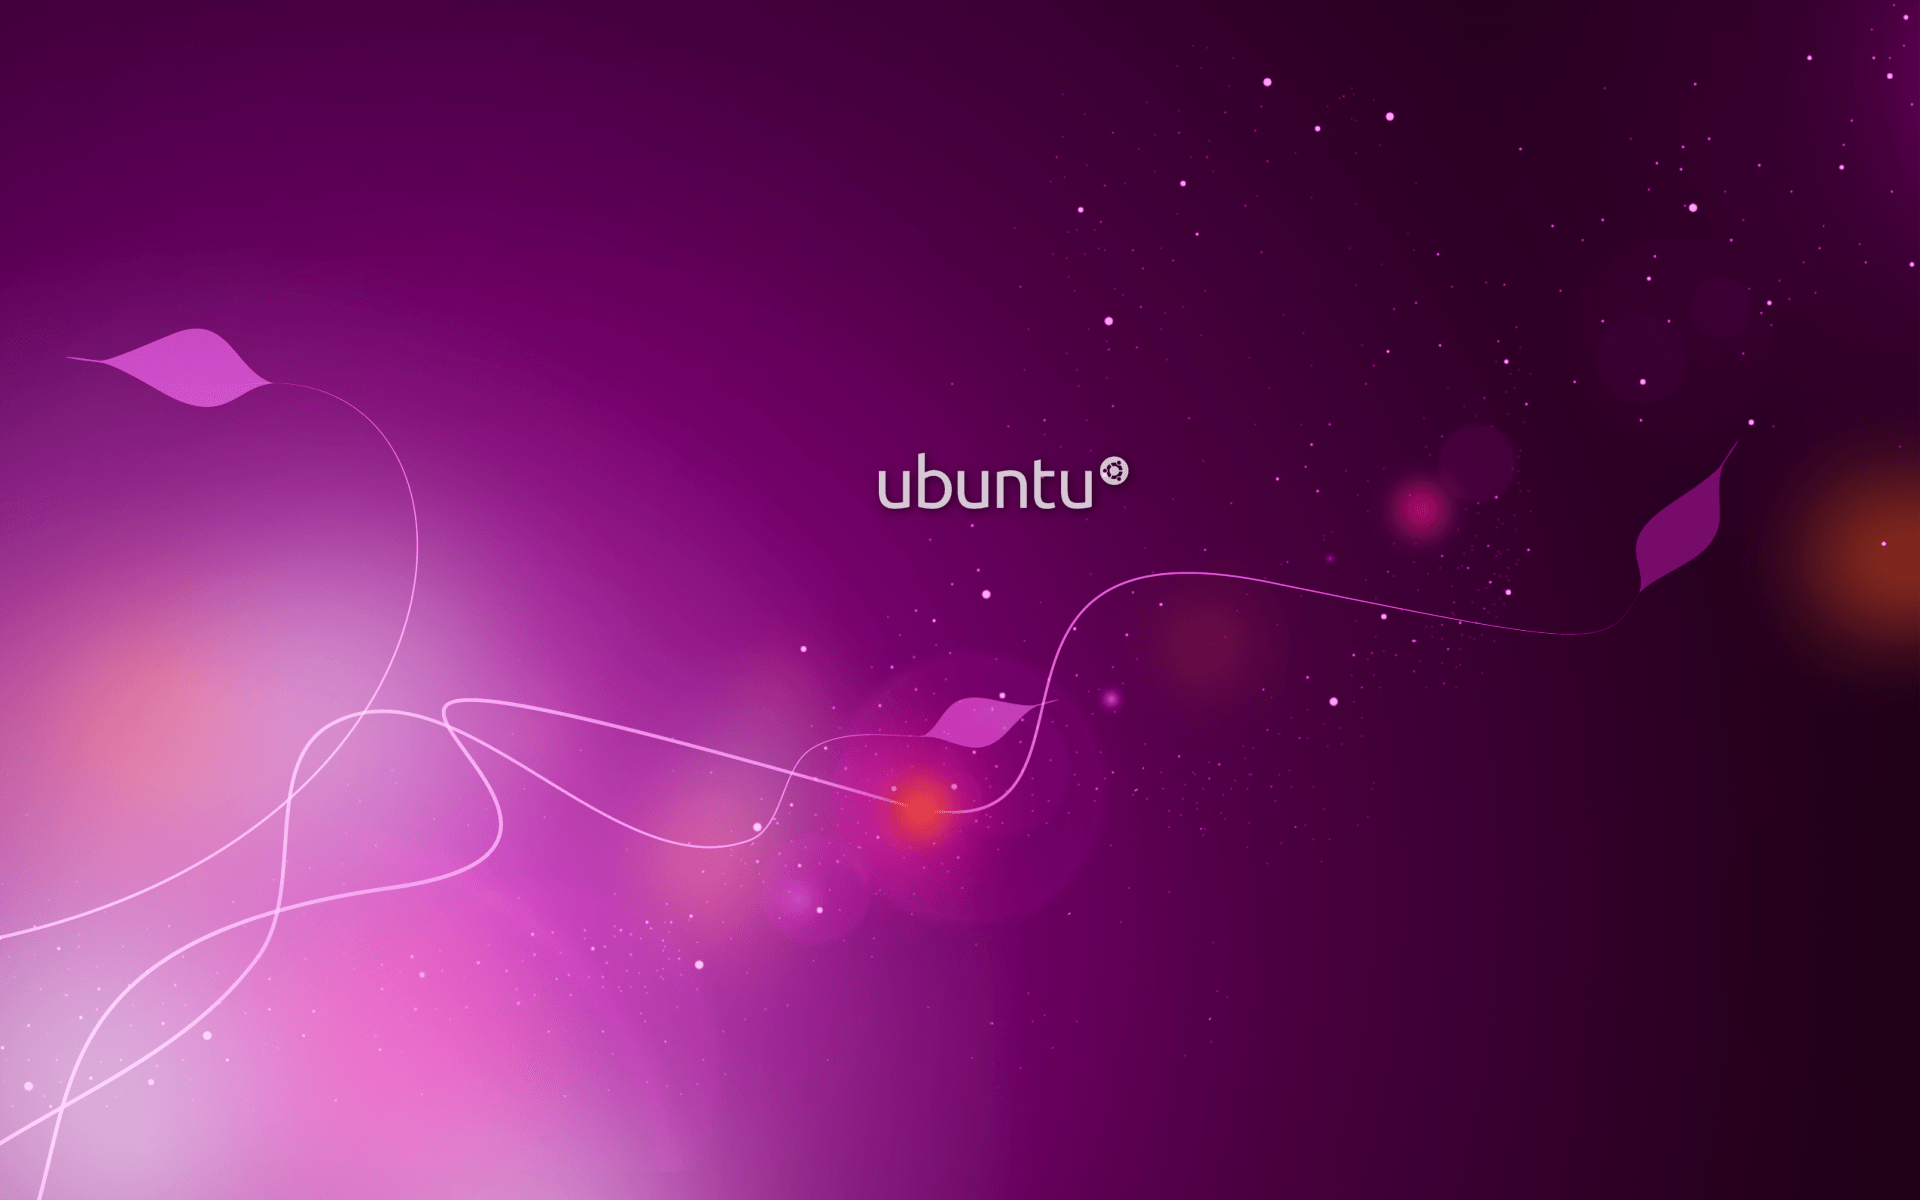 Ubuntu HD Wallpaper, Background Image